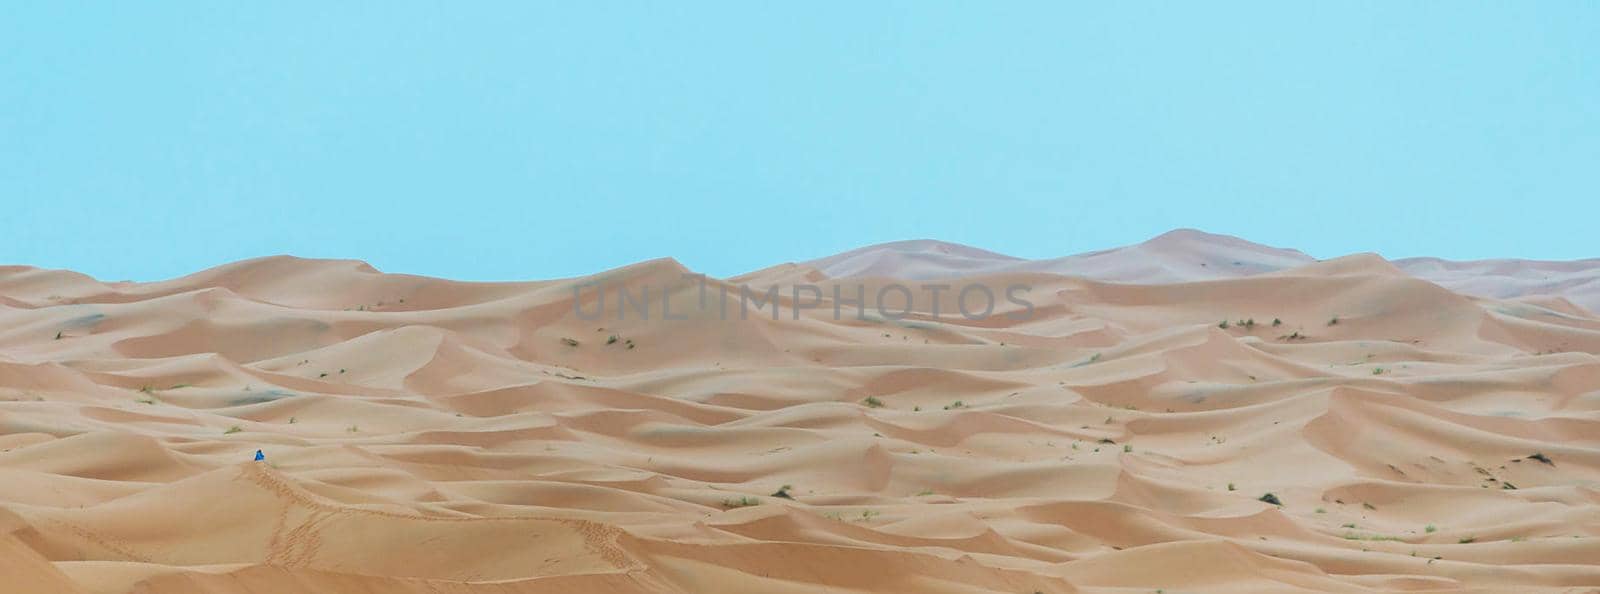 Patterns in the sand of the Sahara Desert